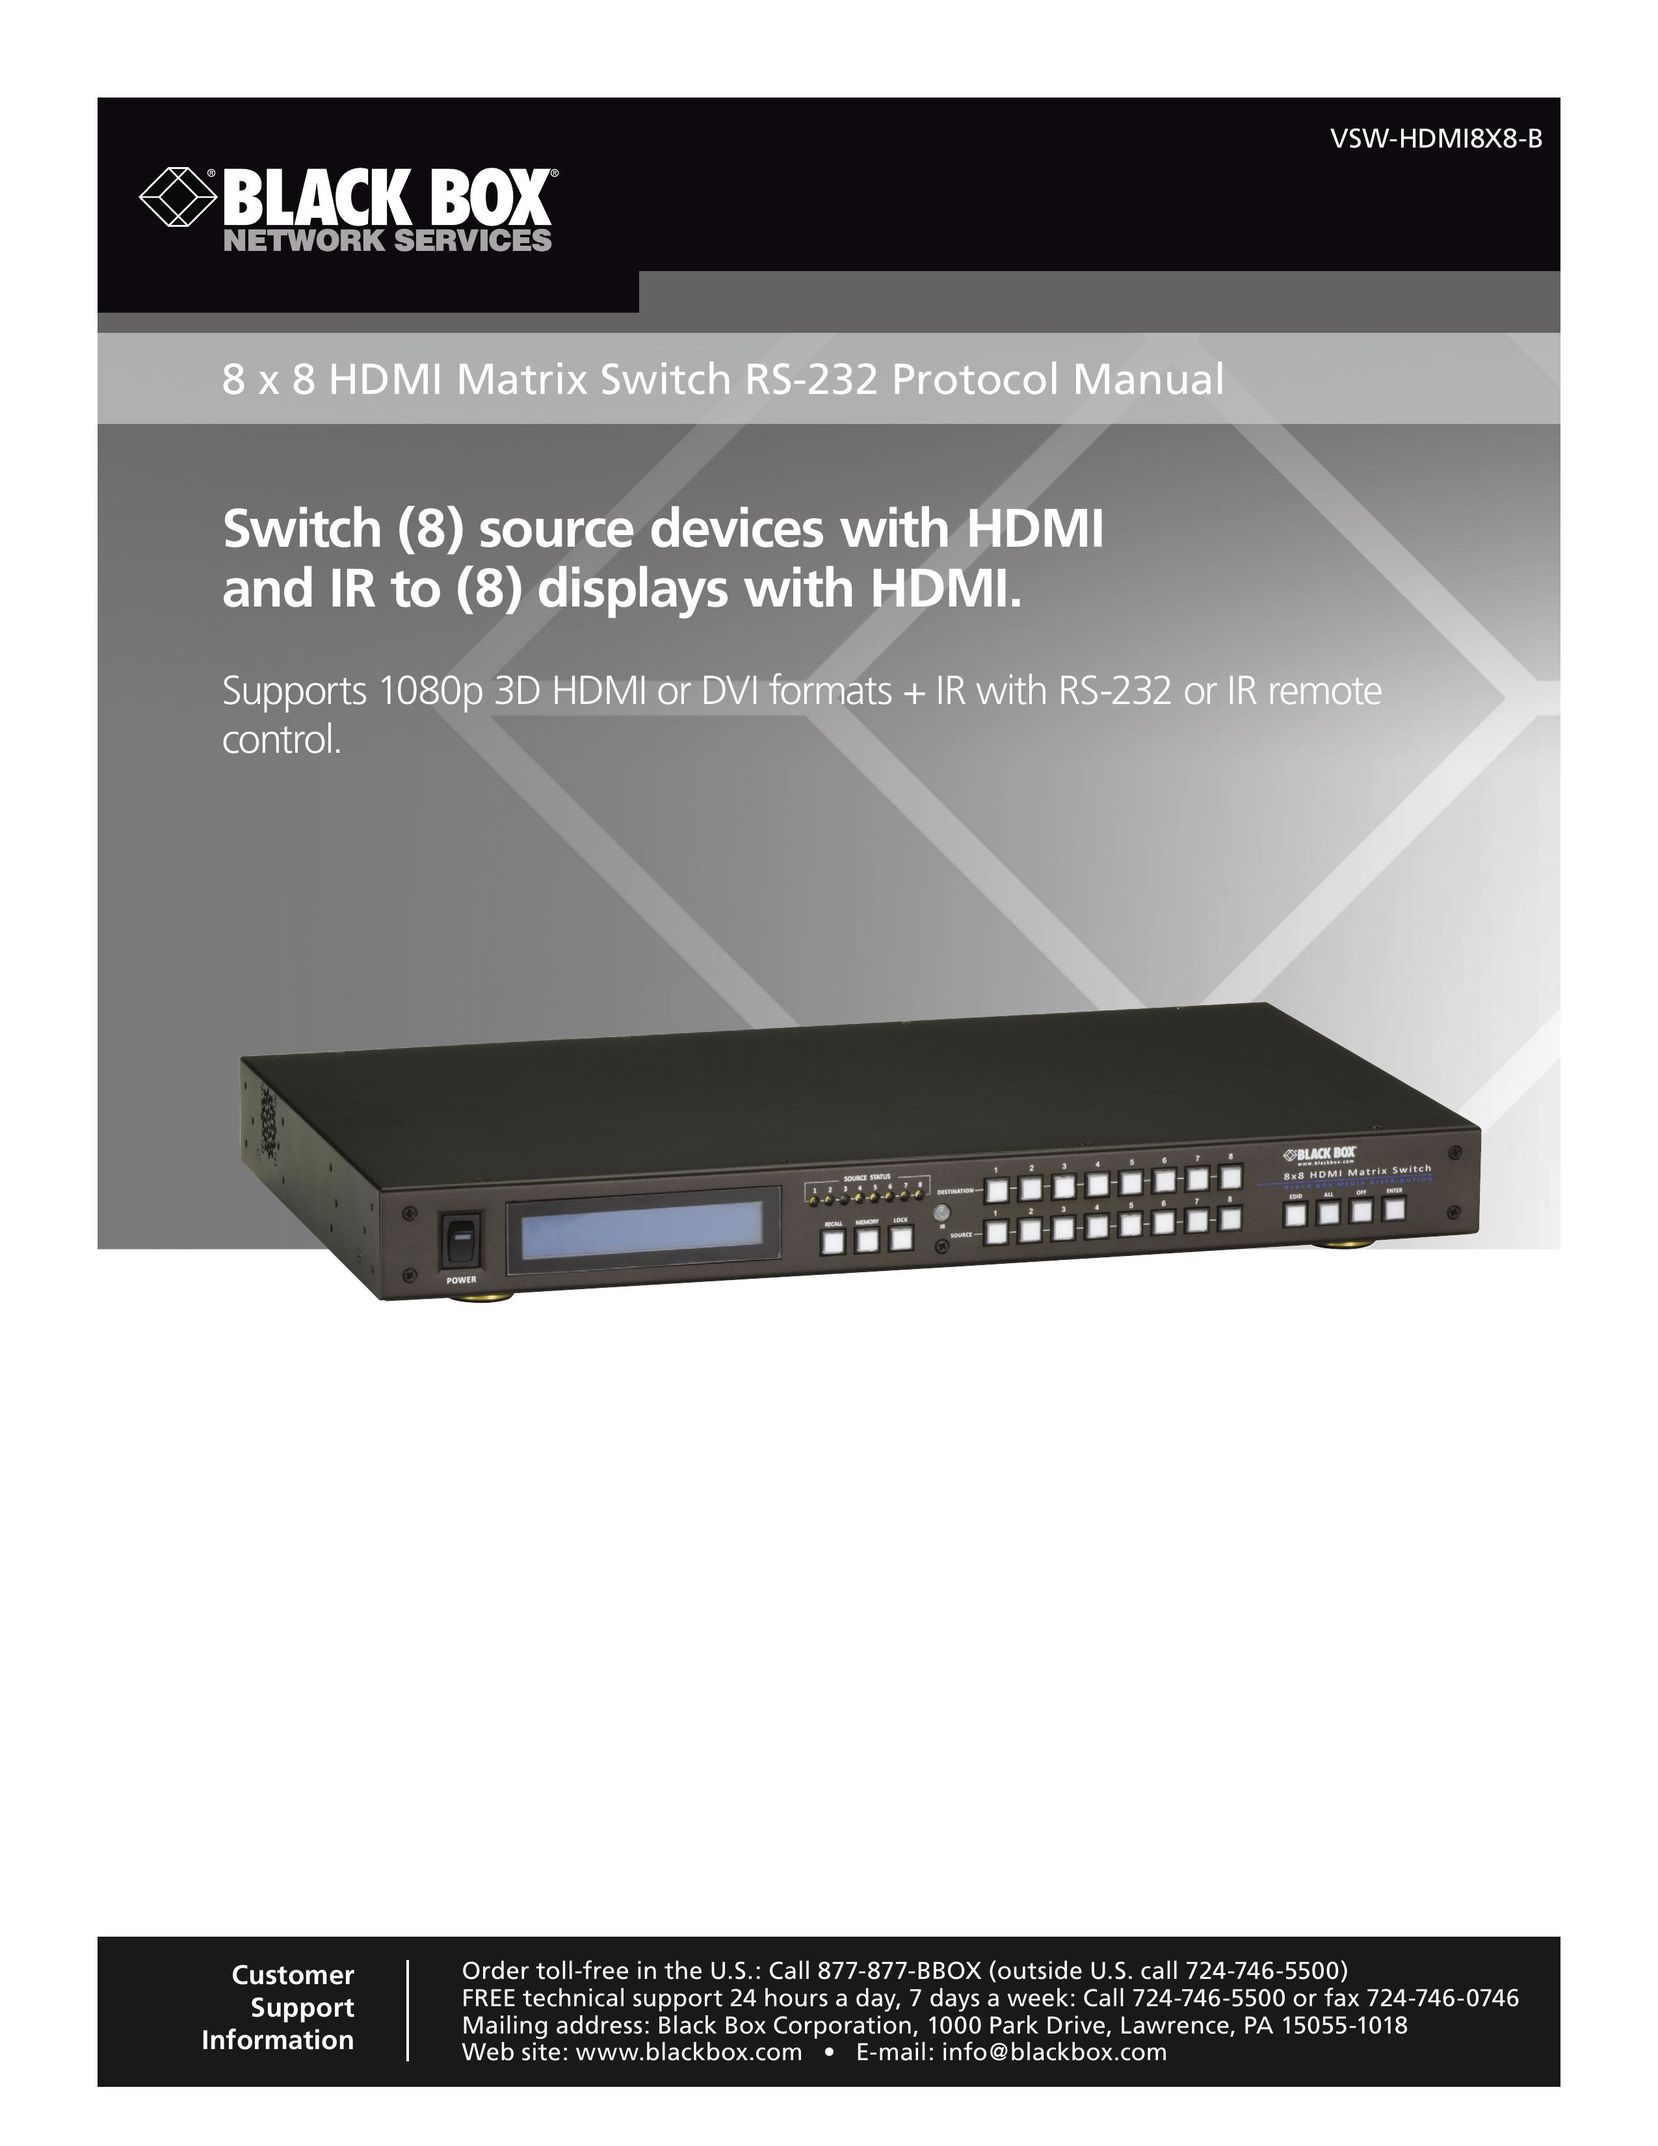 Black Box 8 x 8 HDMI Matrix Switch Switch User Manual